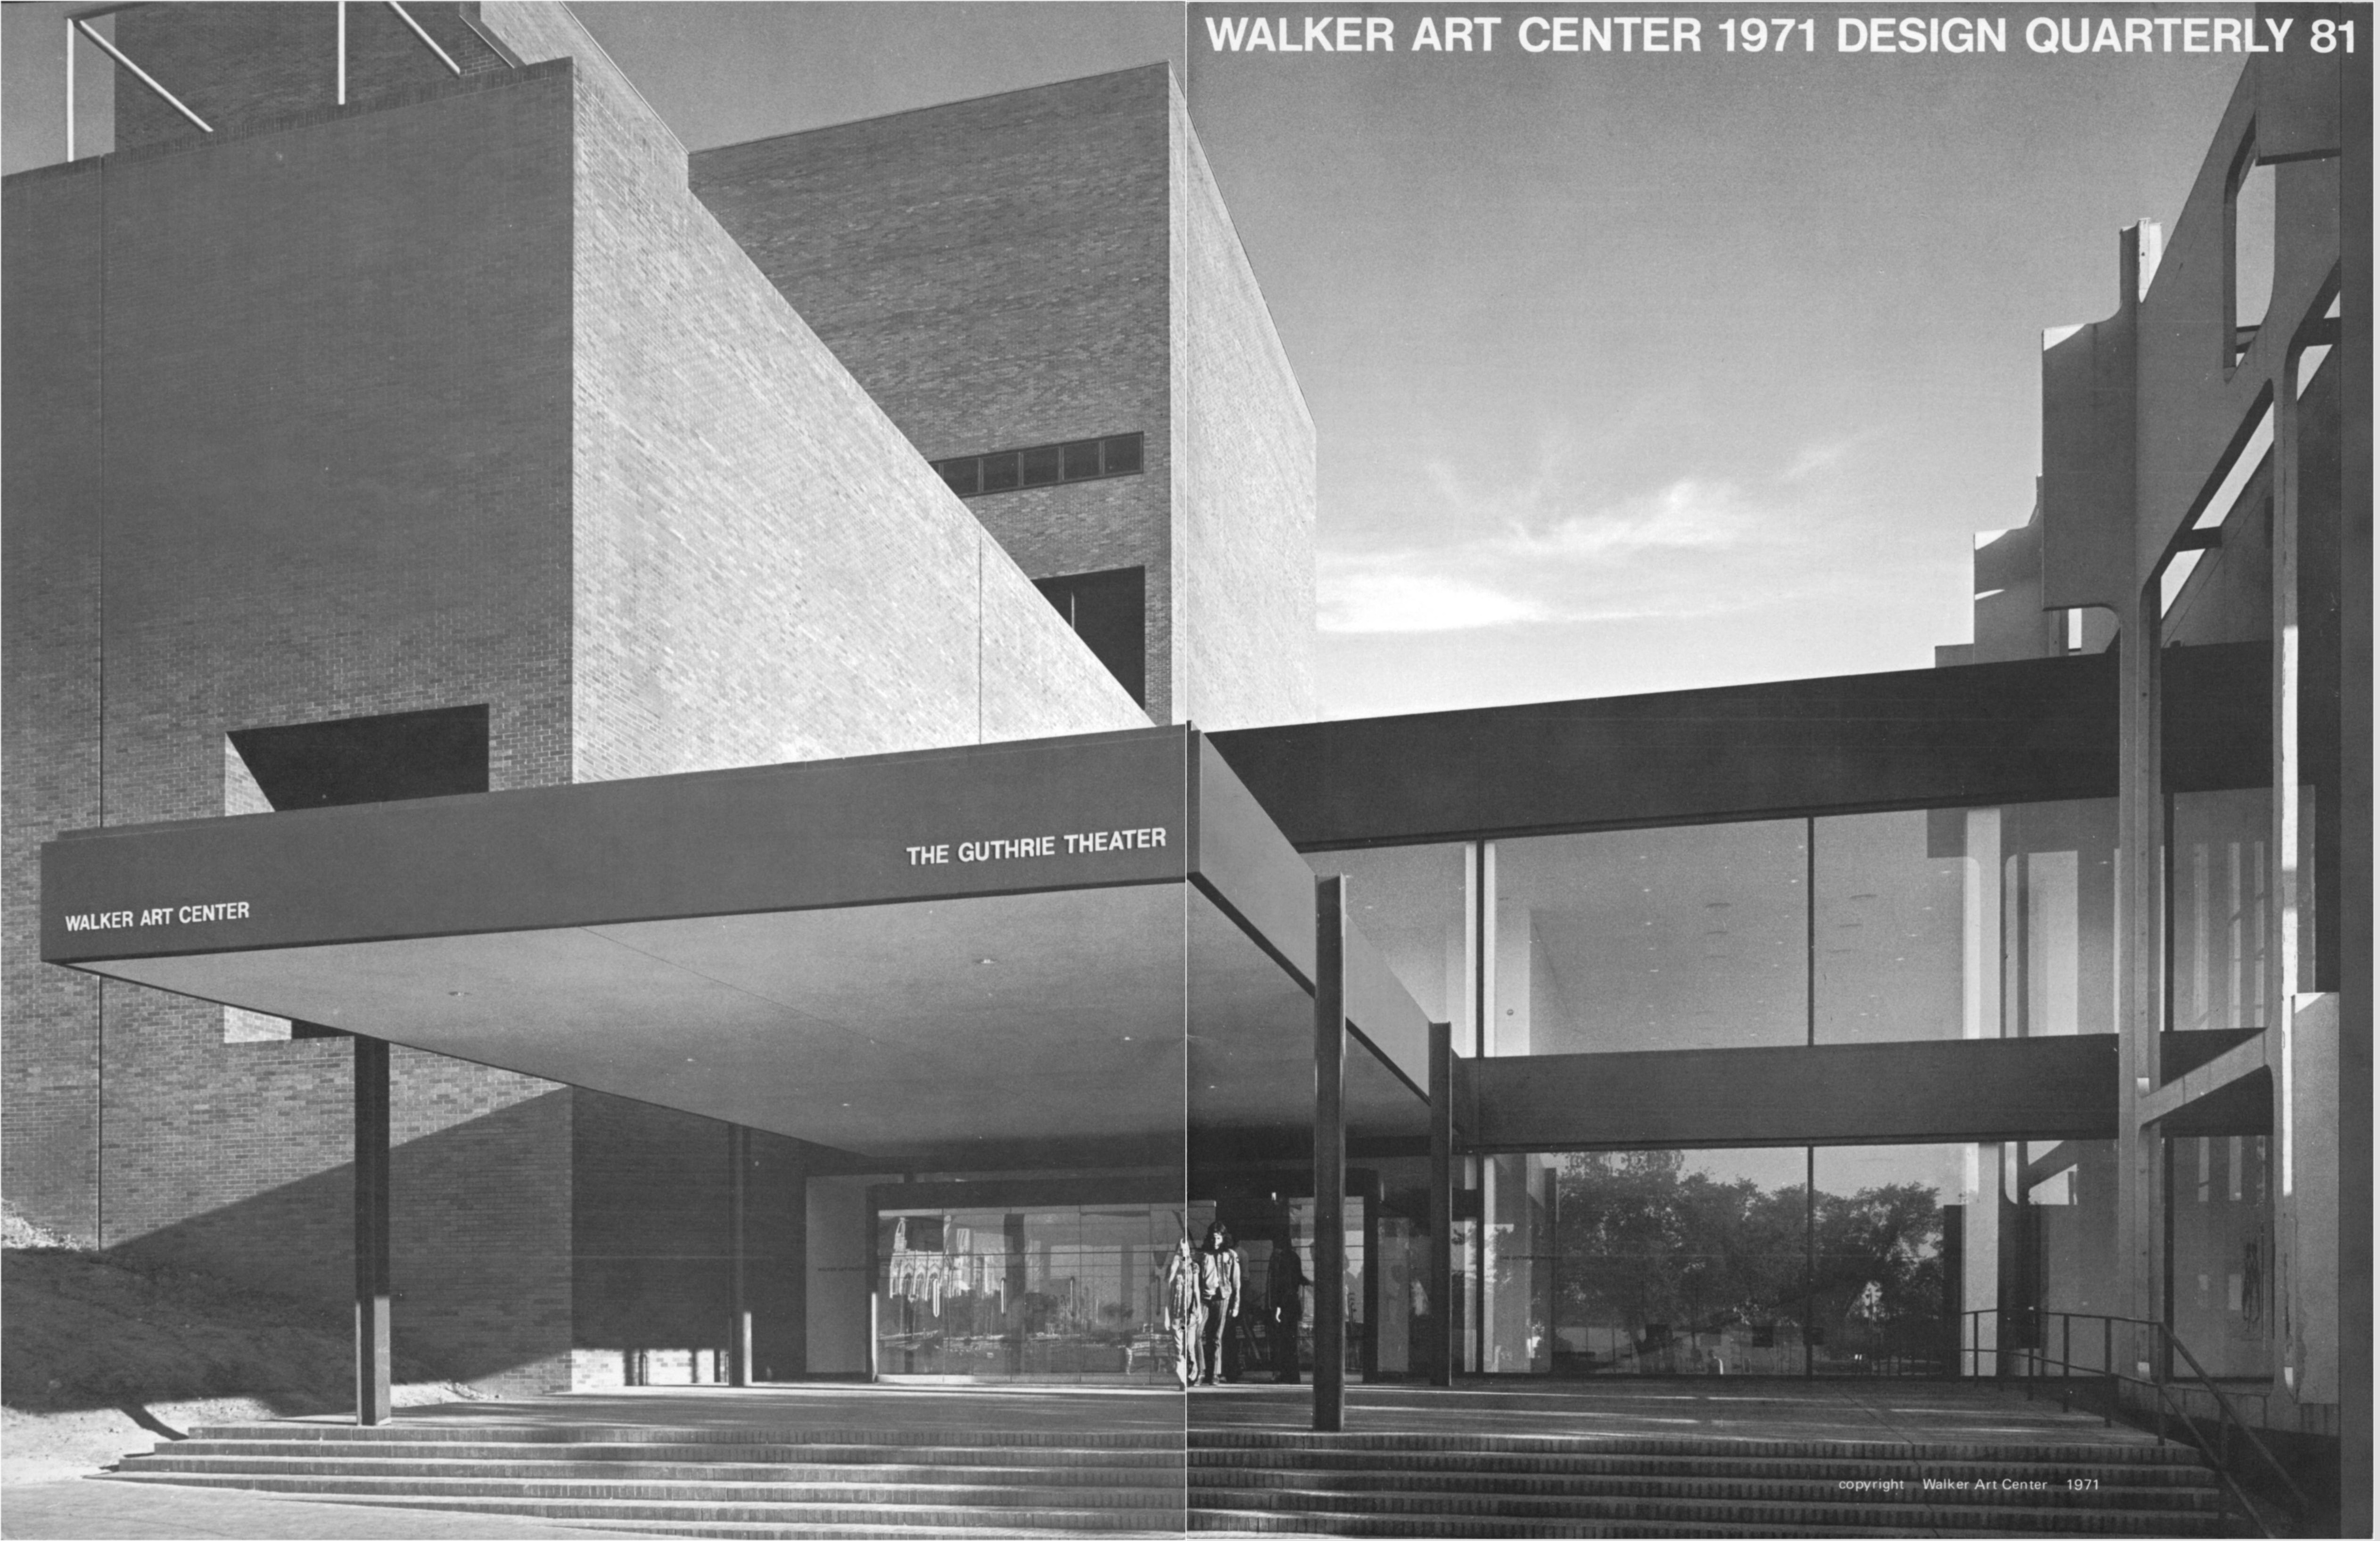 Design Quarterly cover, 1971, depicting Walker Art Center entrance in Minneapolis, MN